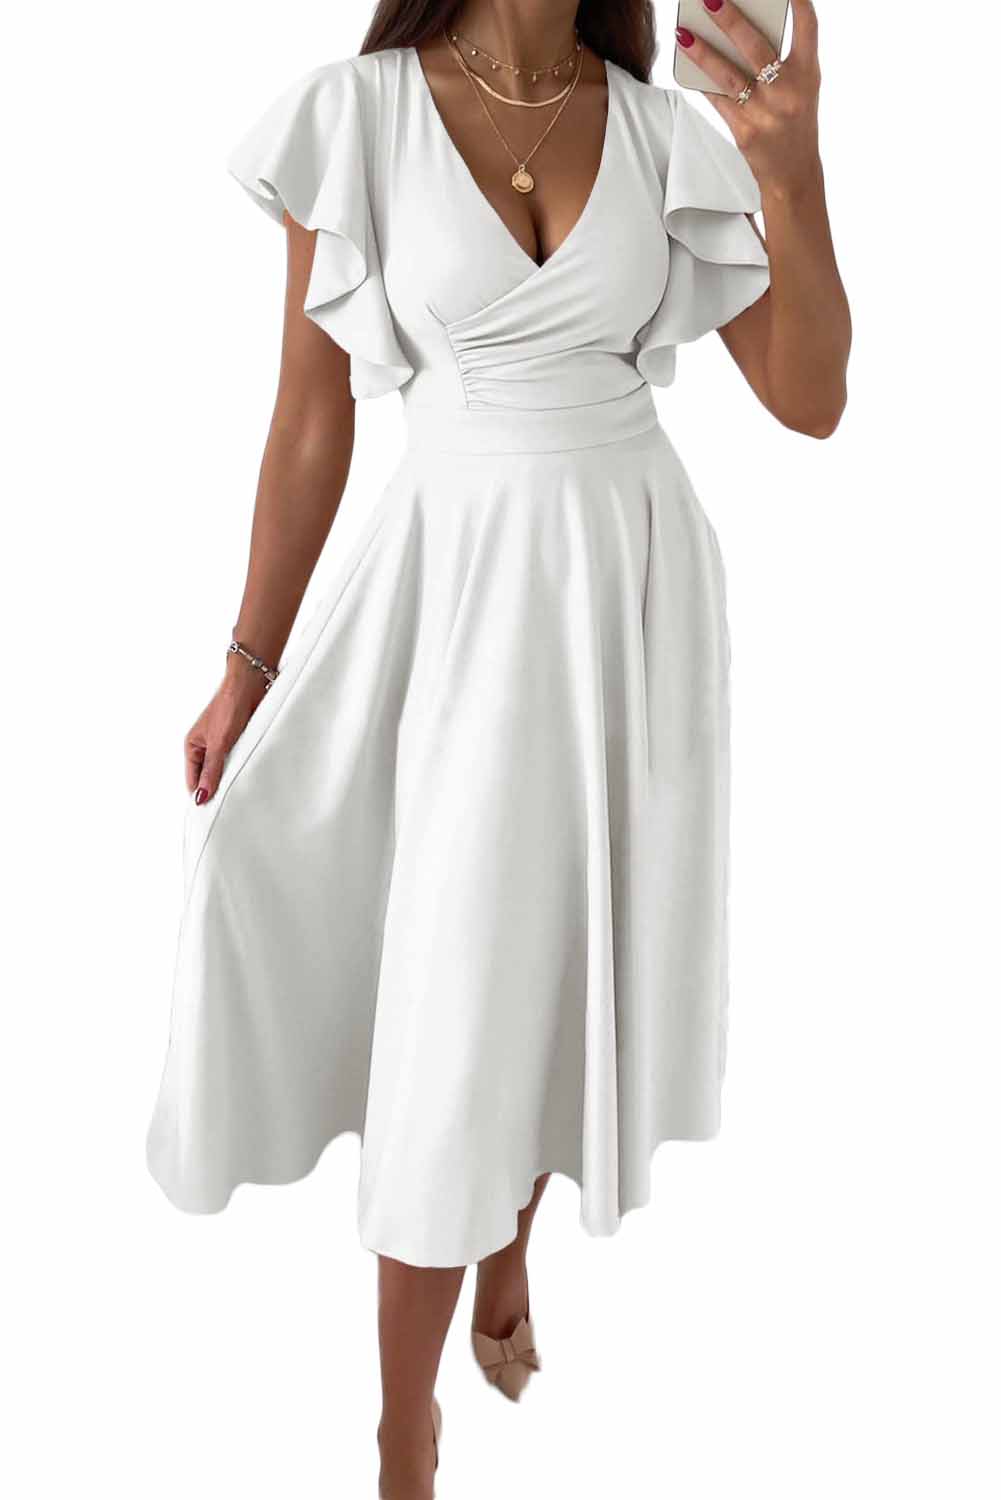 LC6110363-1-S, LC6110363-1-M, LC6110363-1-L, LC6110363-1-XL, LC6110363-1-2XL, White Womens V Neck Ruffle Sleeve Wrap Dress Midi Dress Cocktail Party Dress